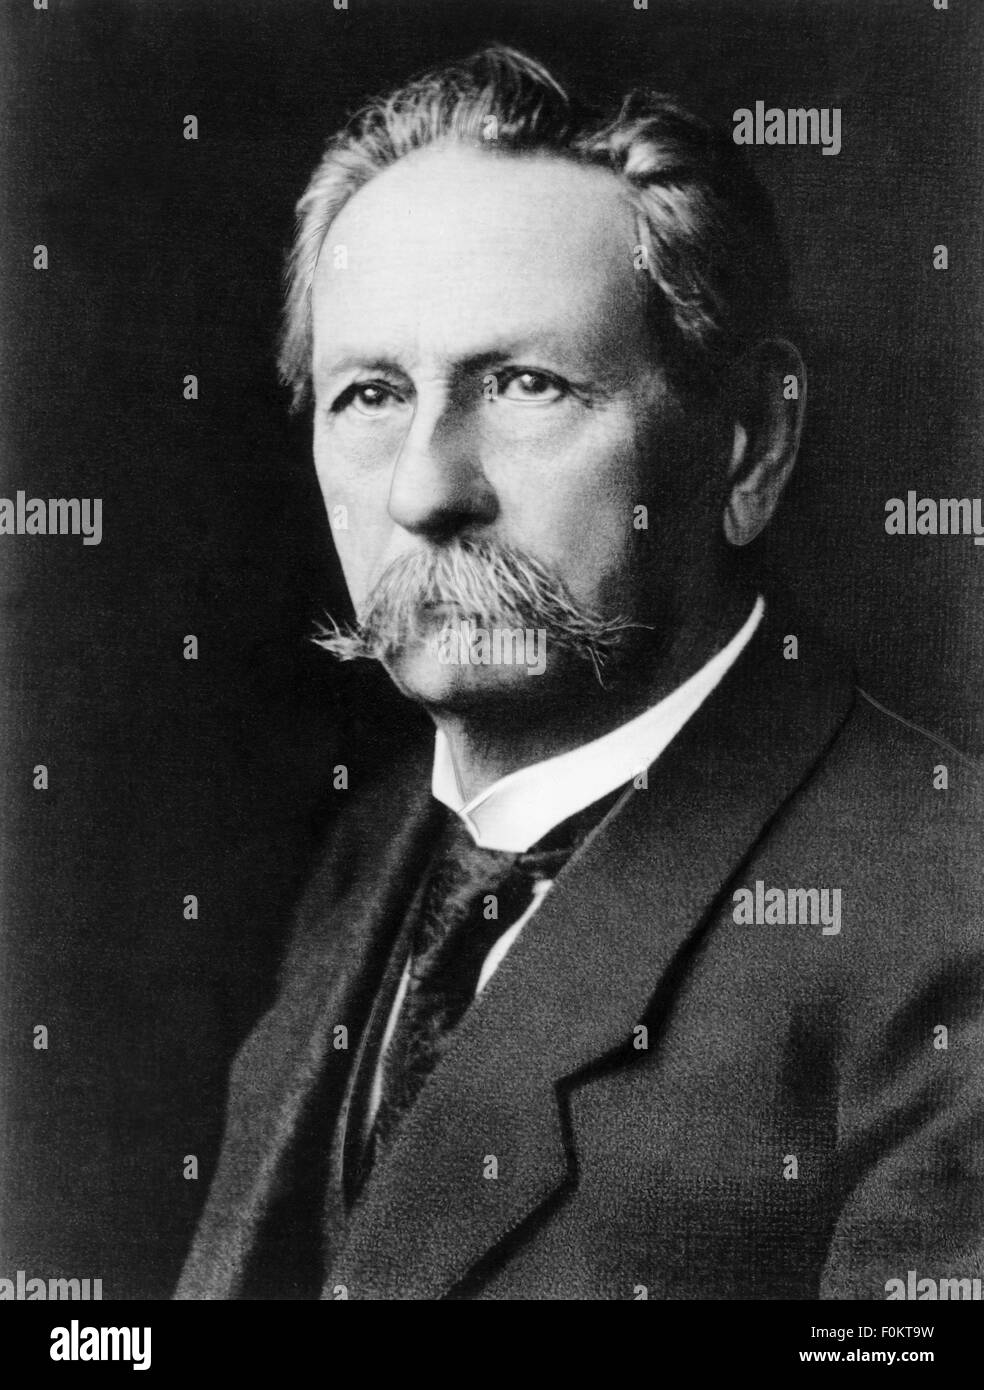 Benz, Carl, 26.11.1844 - 4.4. 1929, German car design engineer, portrait, circa 1900, Stock Photo